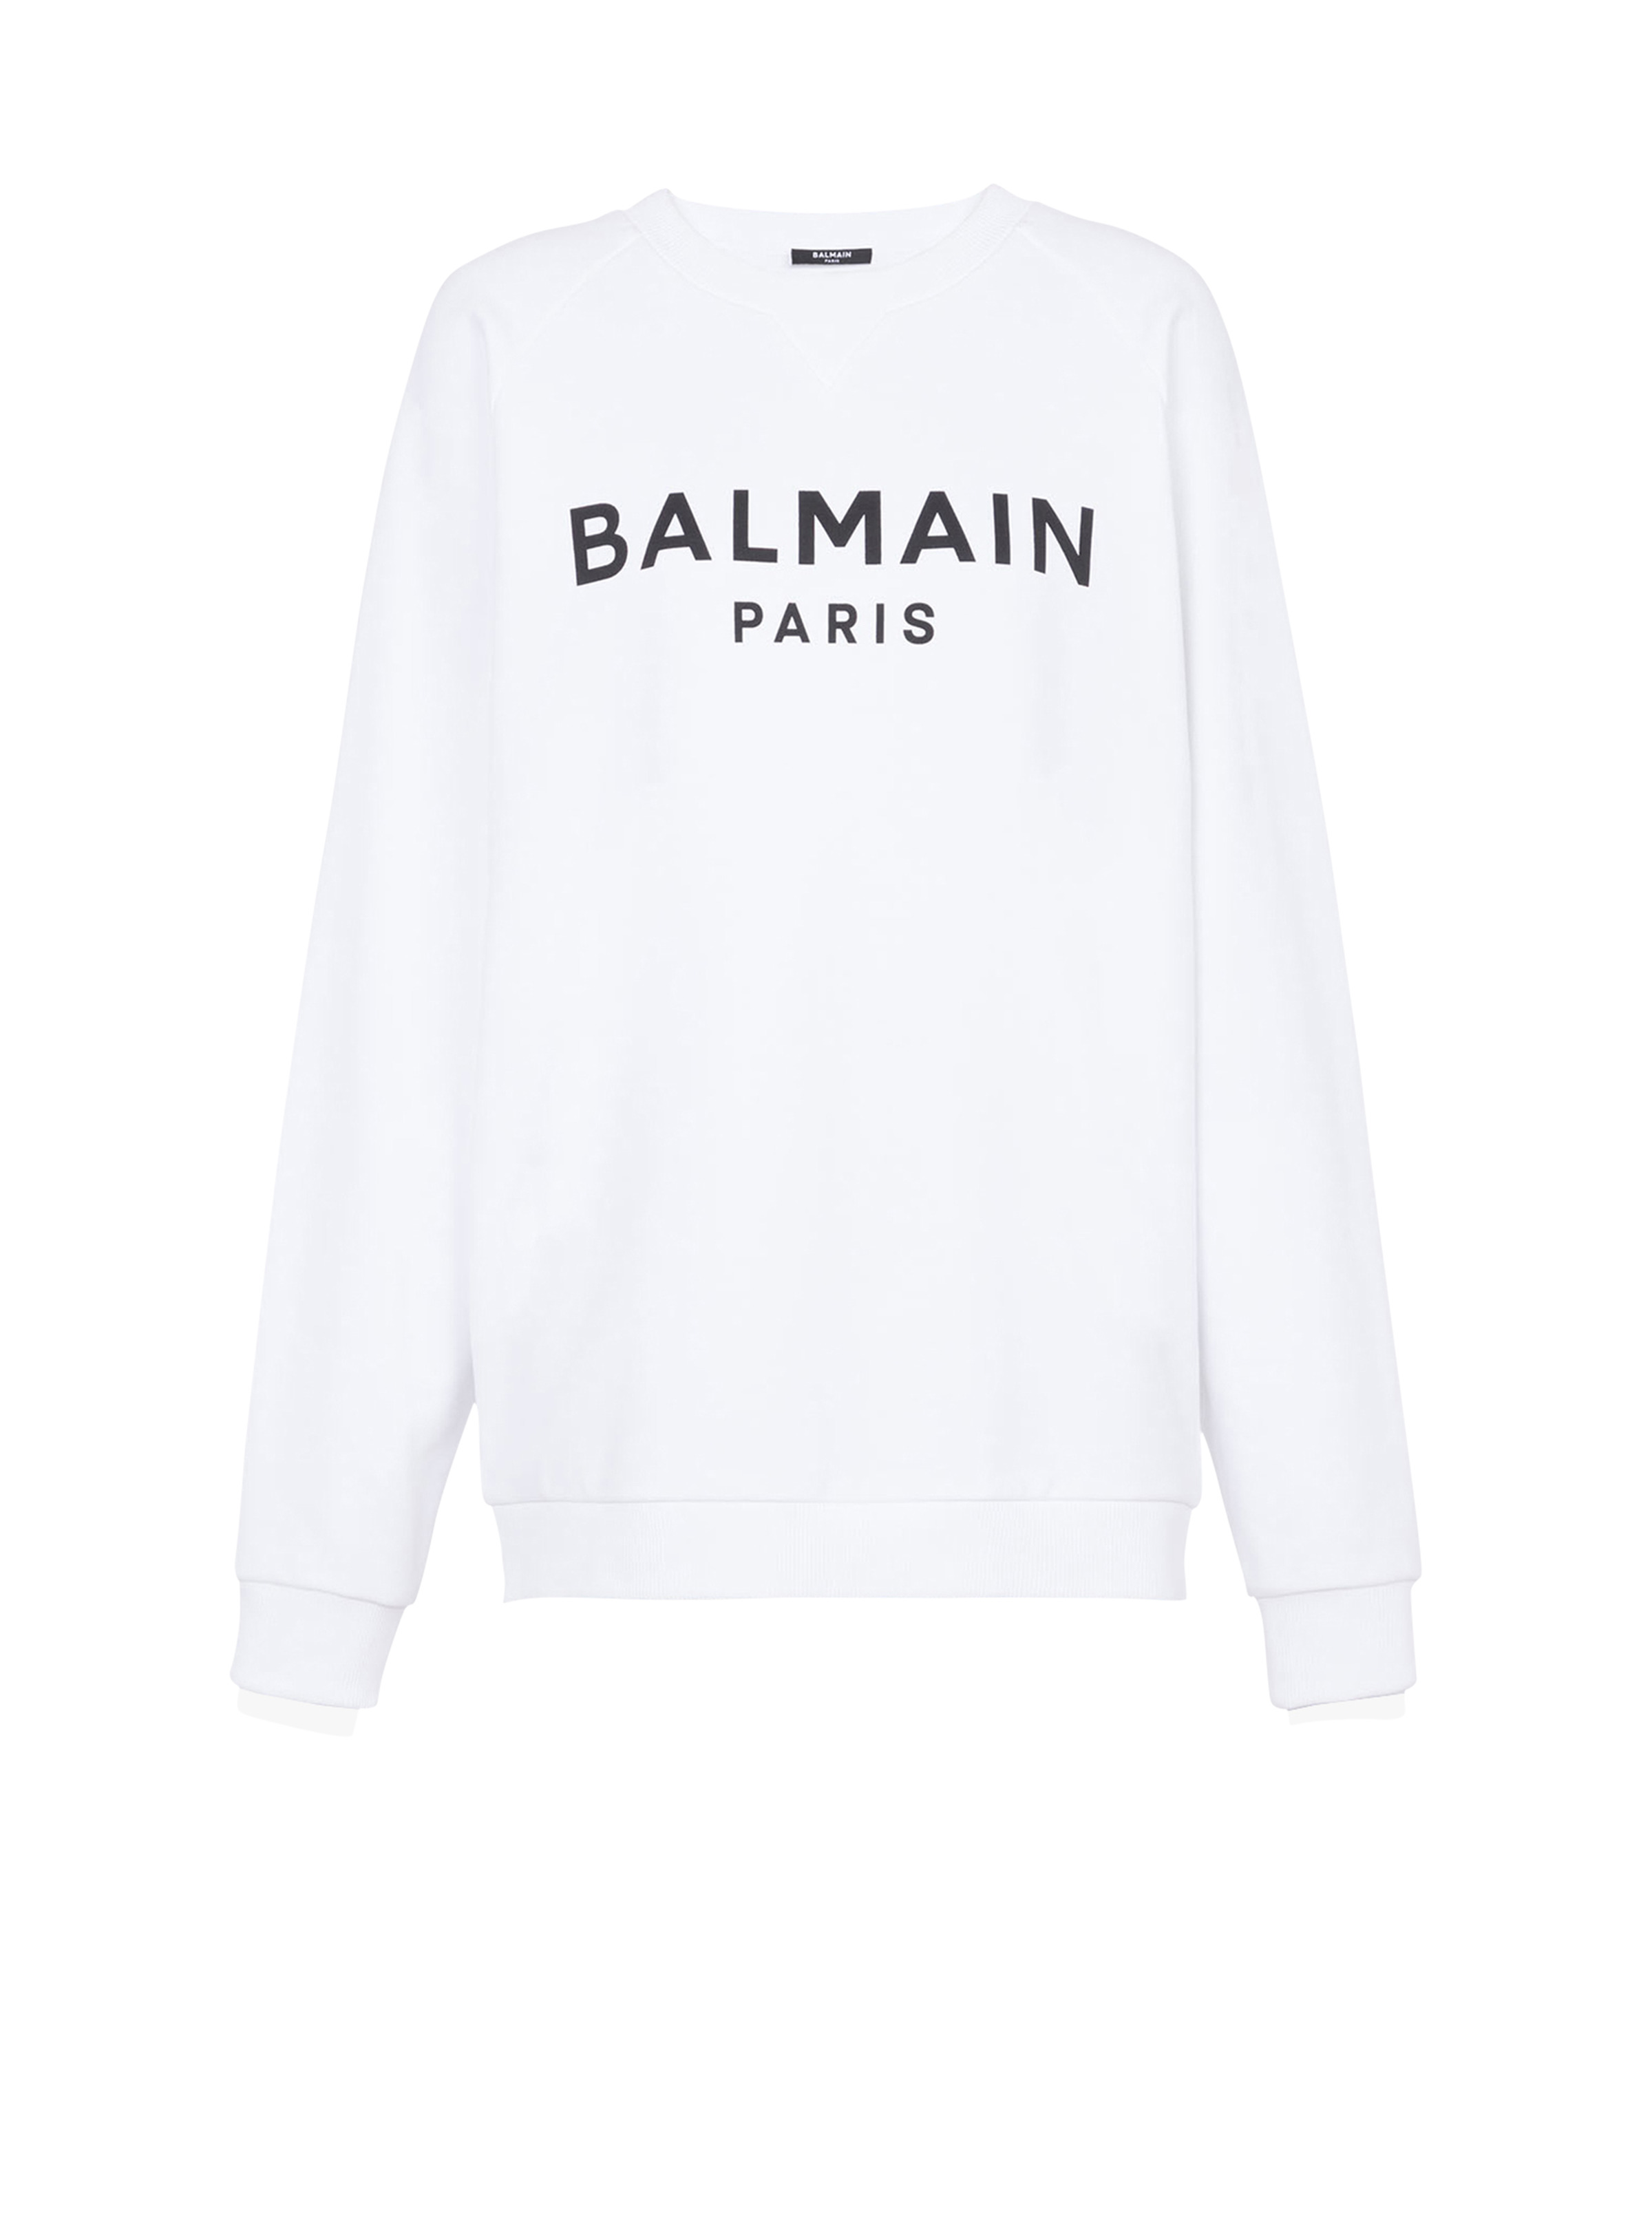 Balmain Paris sweatshirt - 1